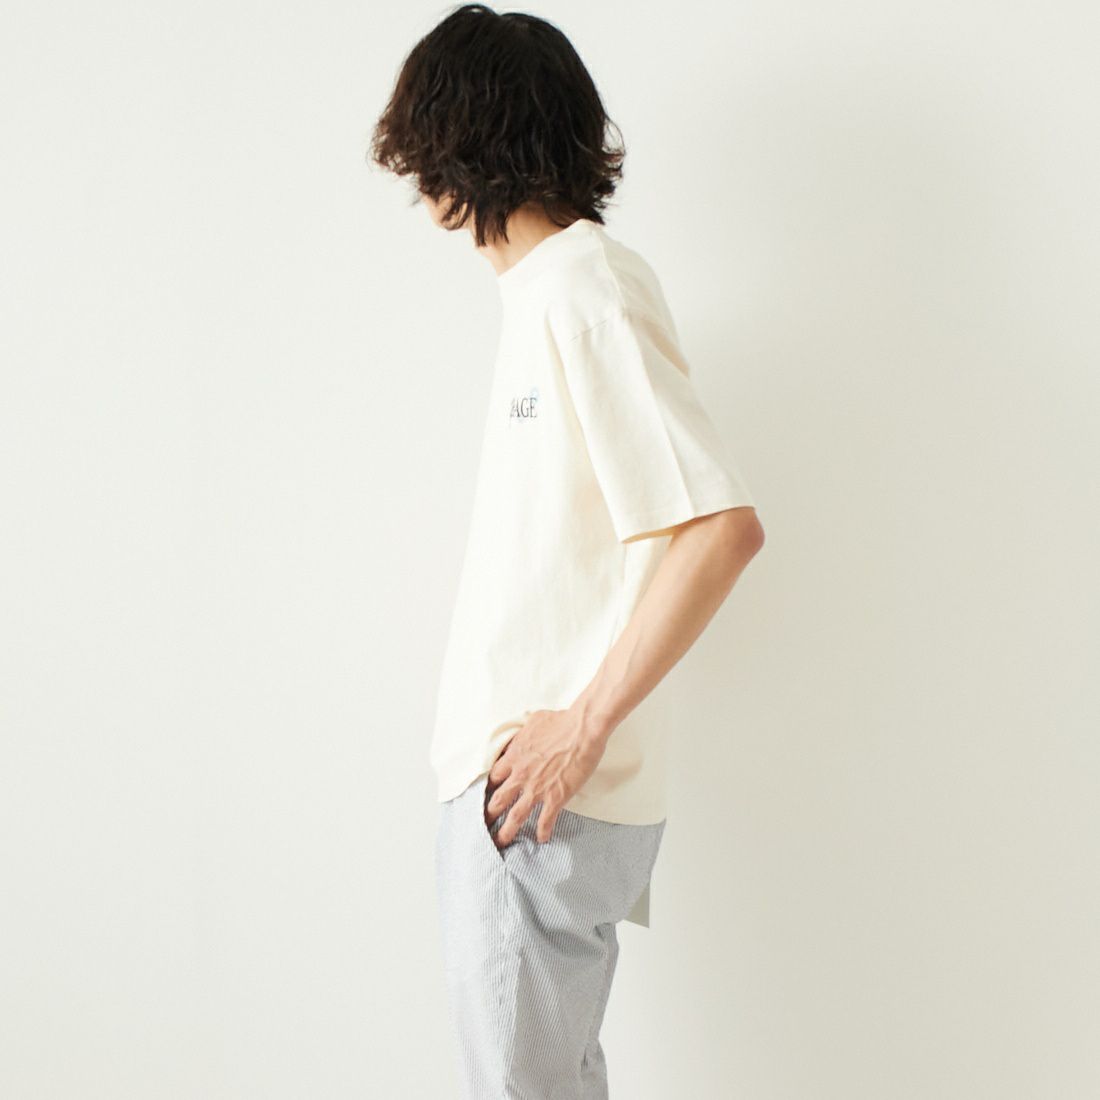 Jeans Factory Clothes [ジーンズファクトリークローズ] DISCOプリントTシャツ [2322-420IN-B] OFF WHITE &&モデル身長：182cm 着用サイズ：L&&